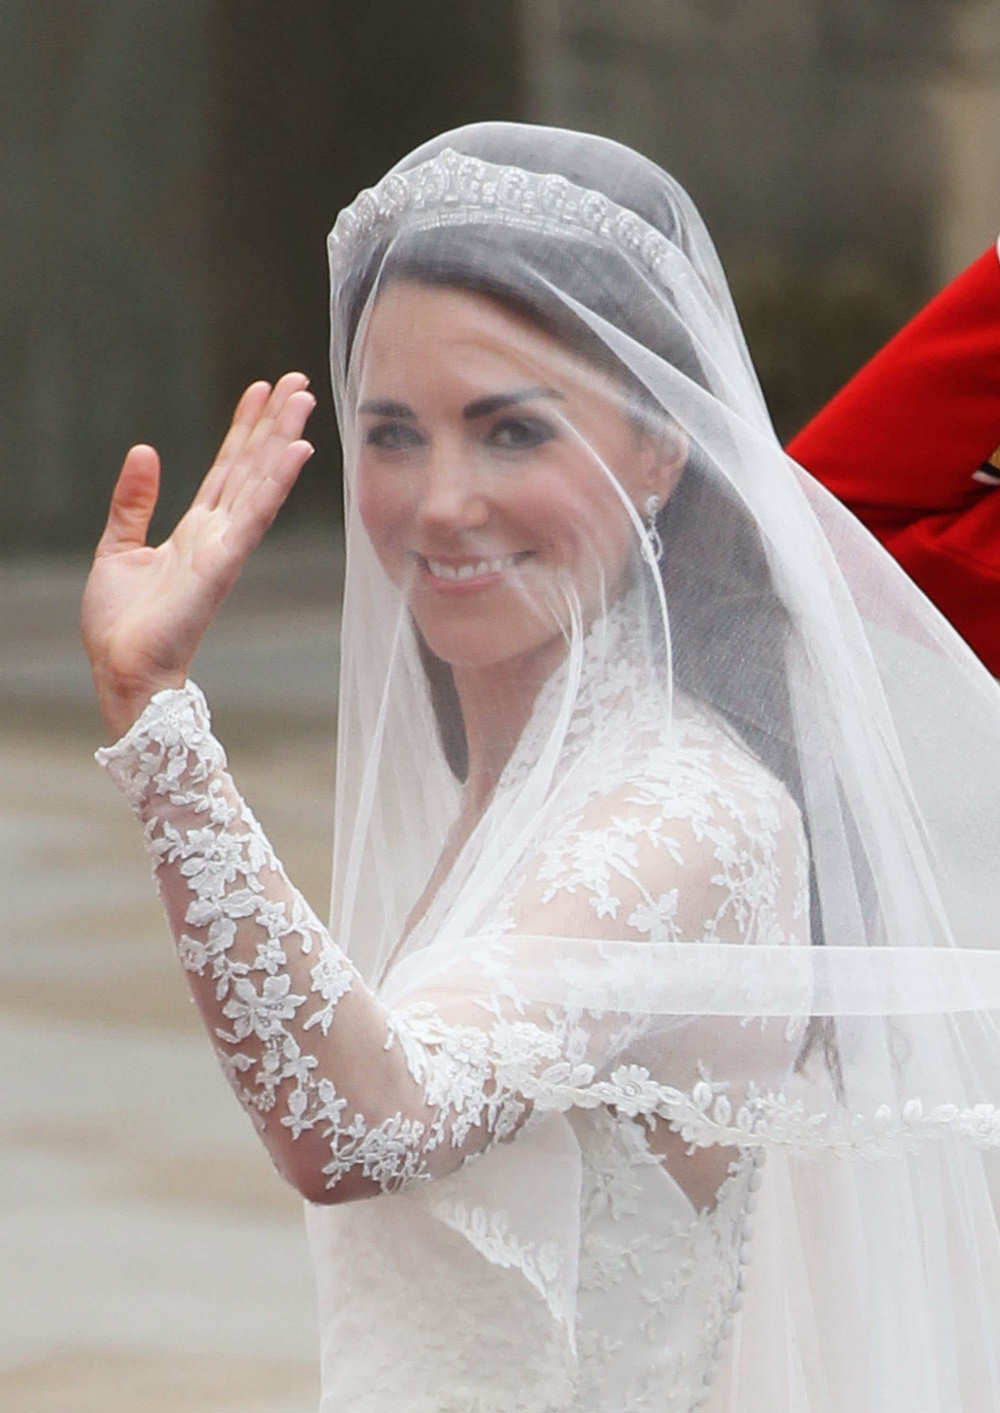 Kate Middleton At Her Royal